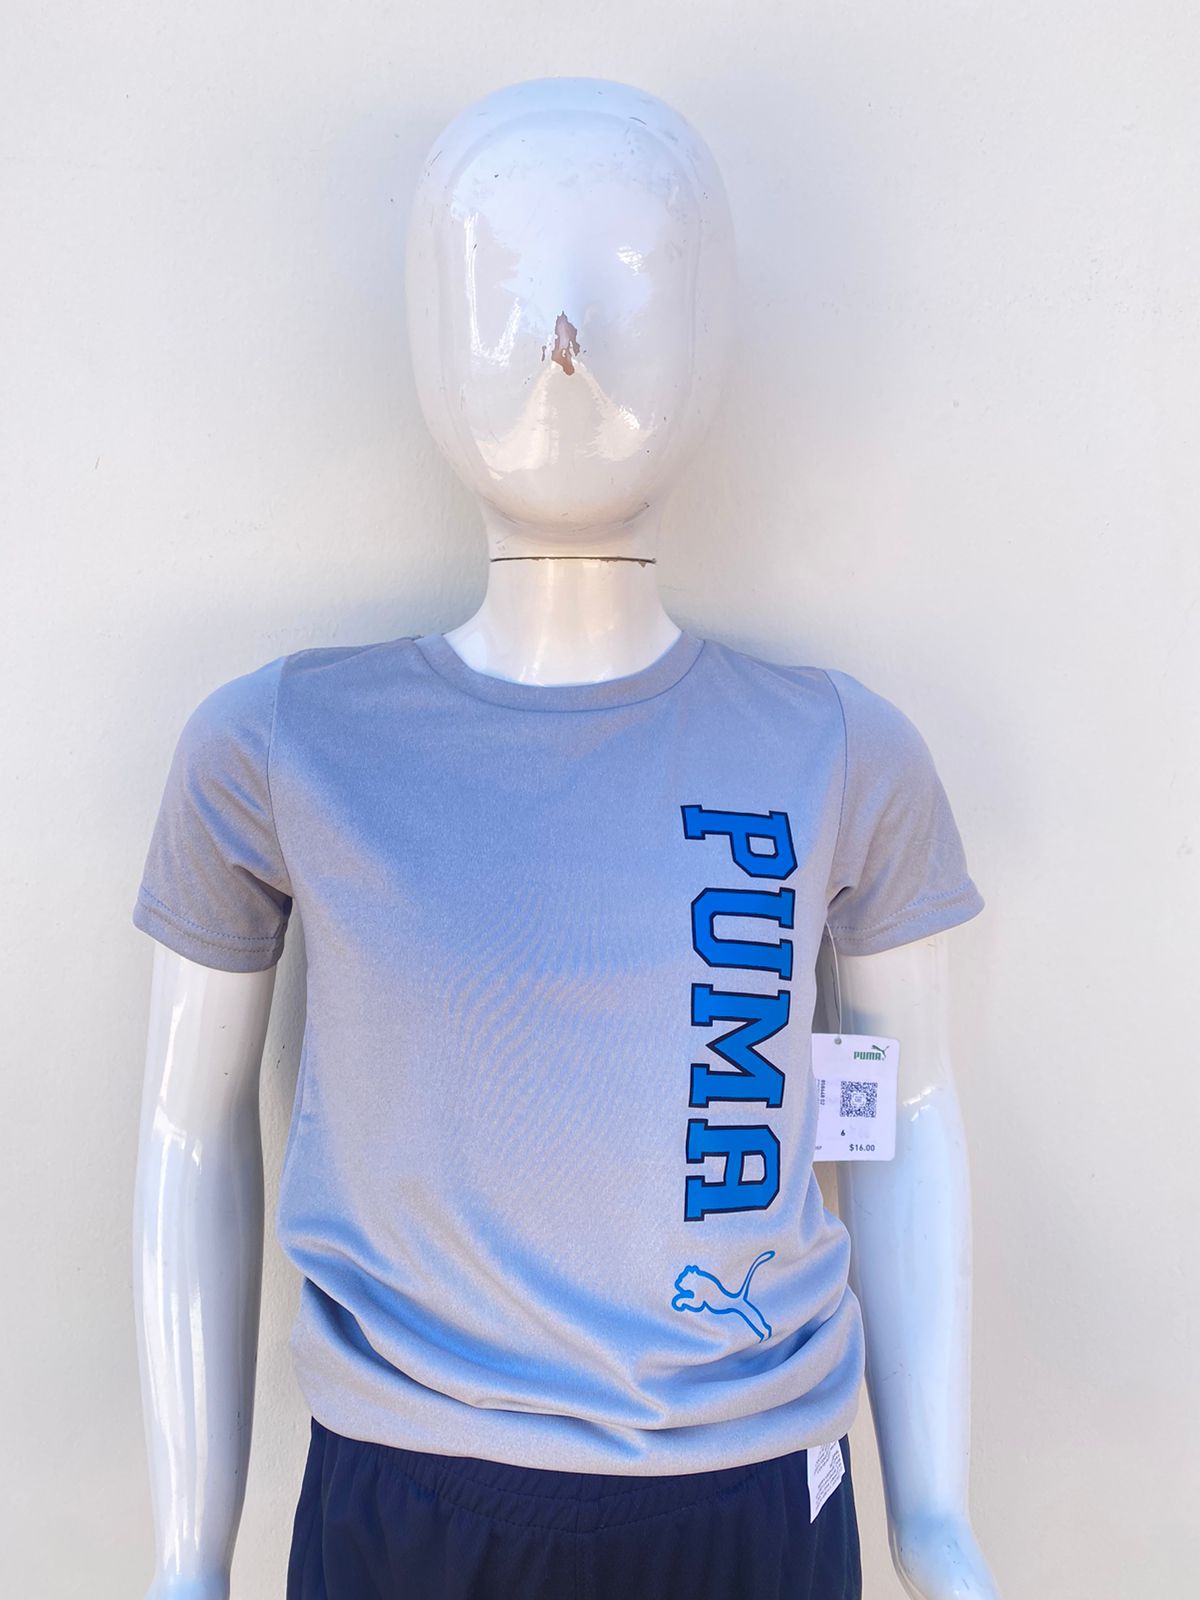 T-shirt Puma original gris con letras PUMA en azul.